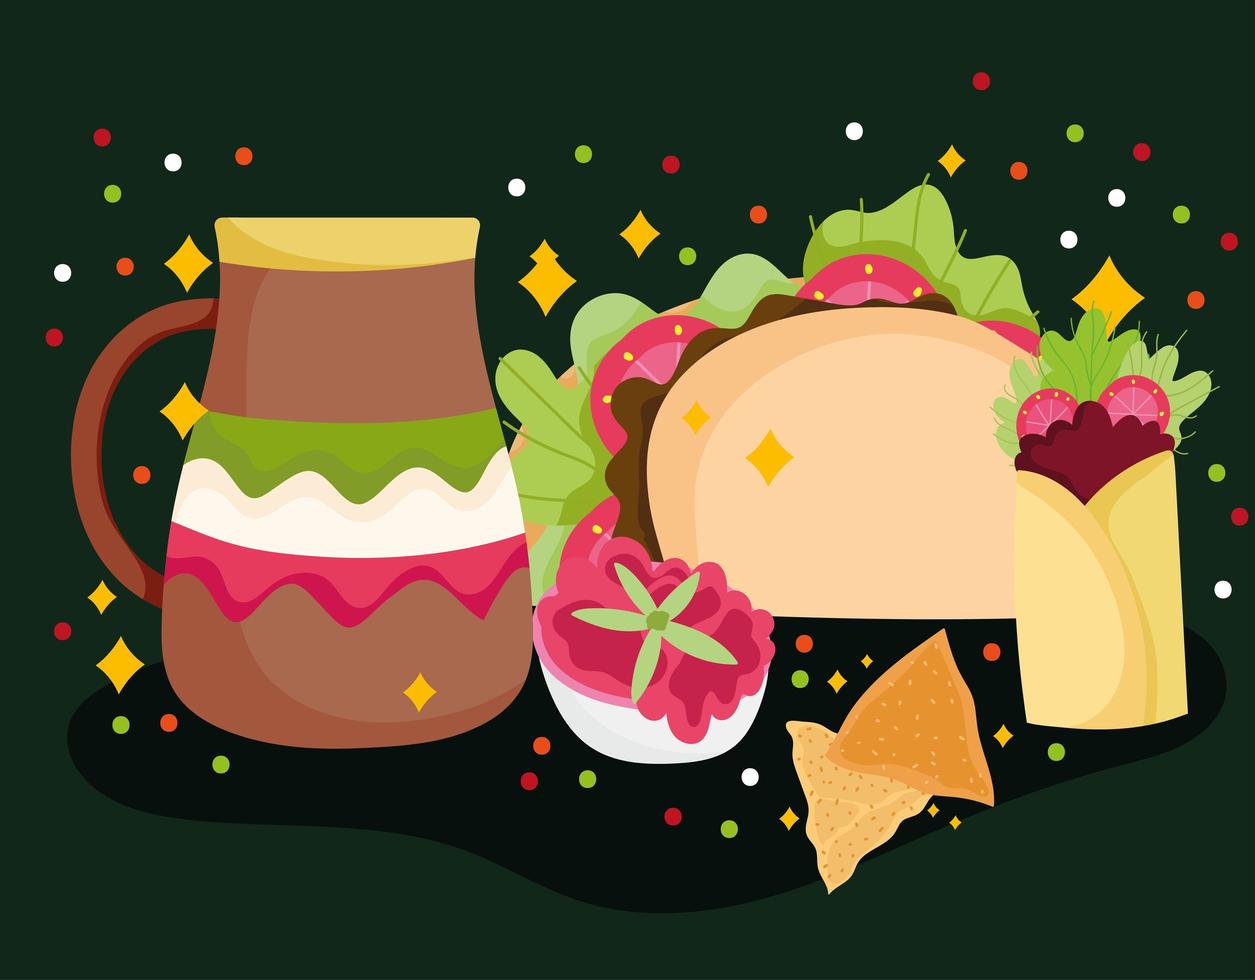 mexico culture traditional food taco sauce nacho and burrito vector